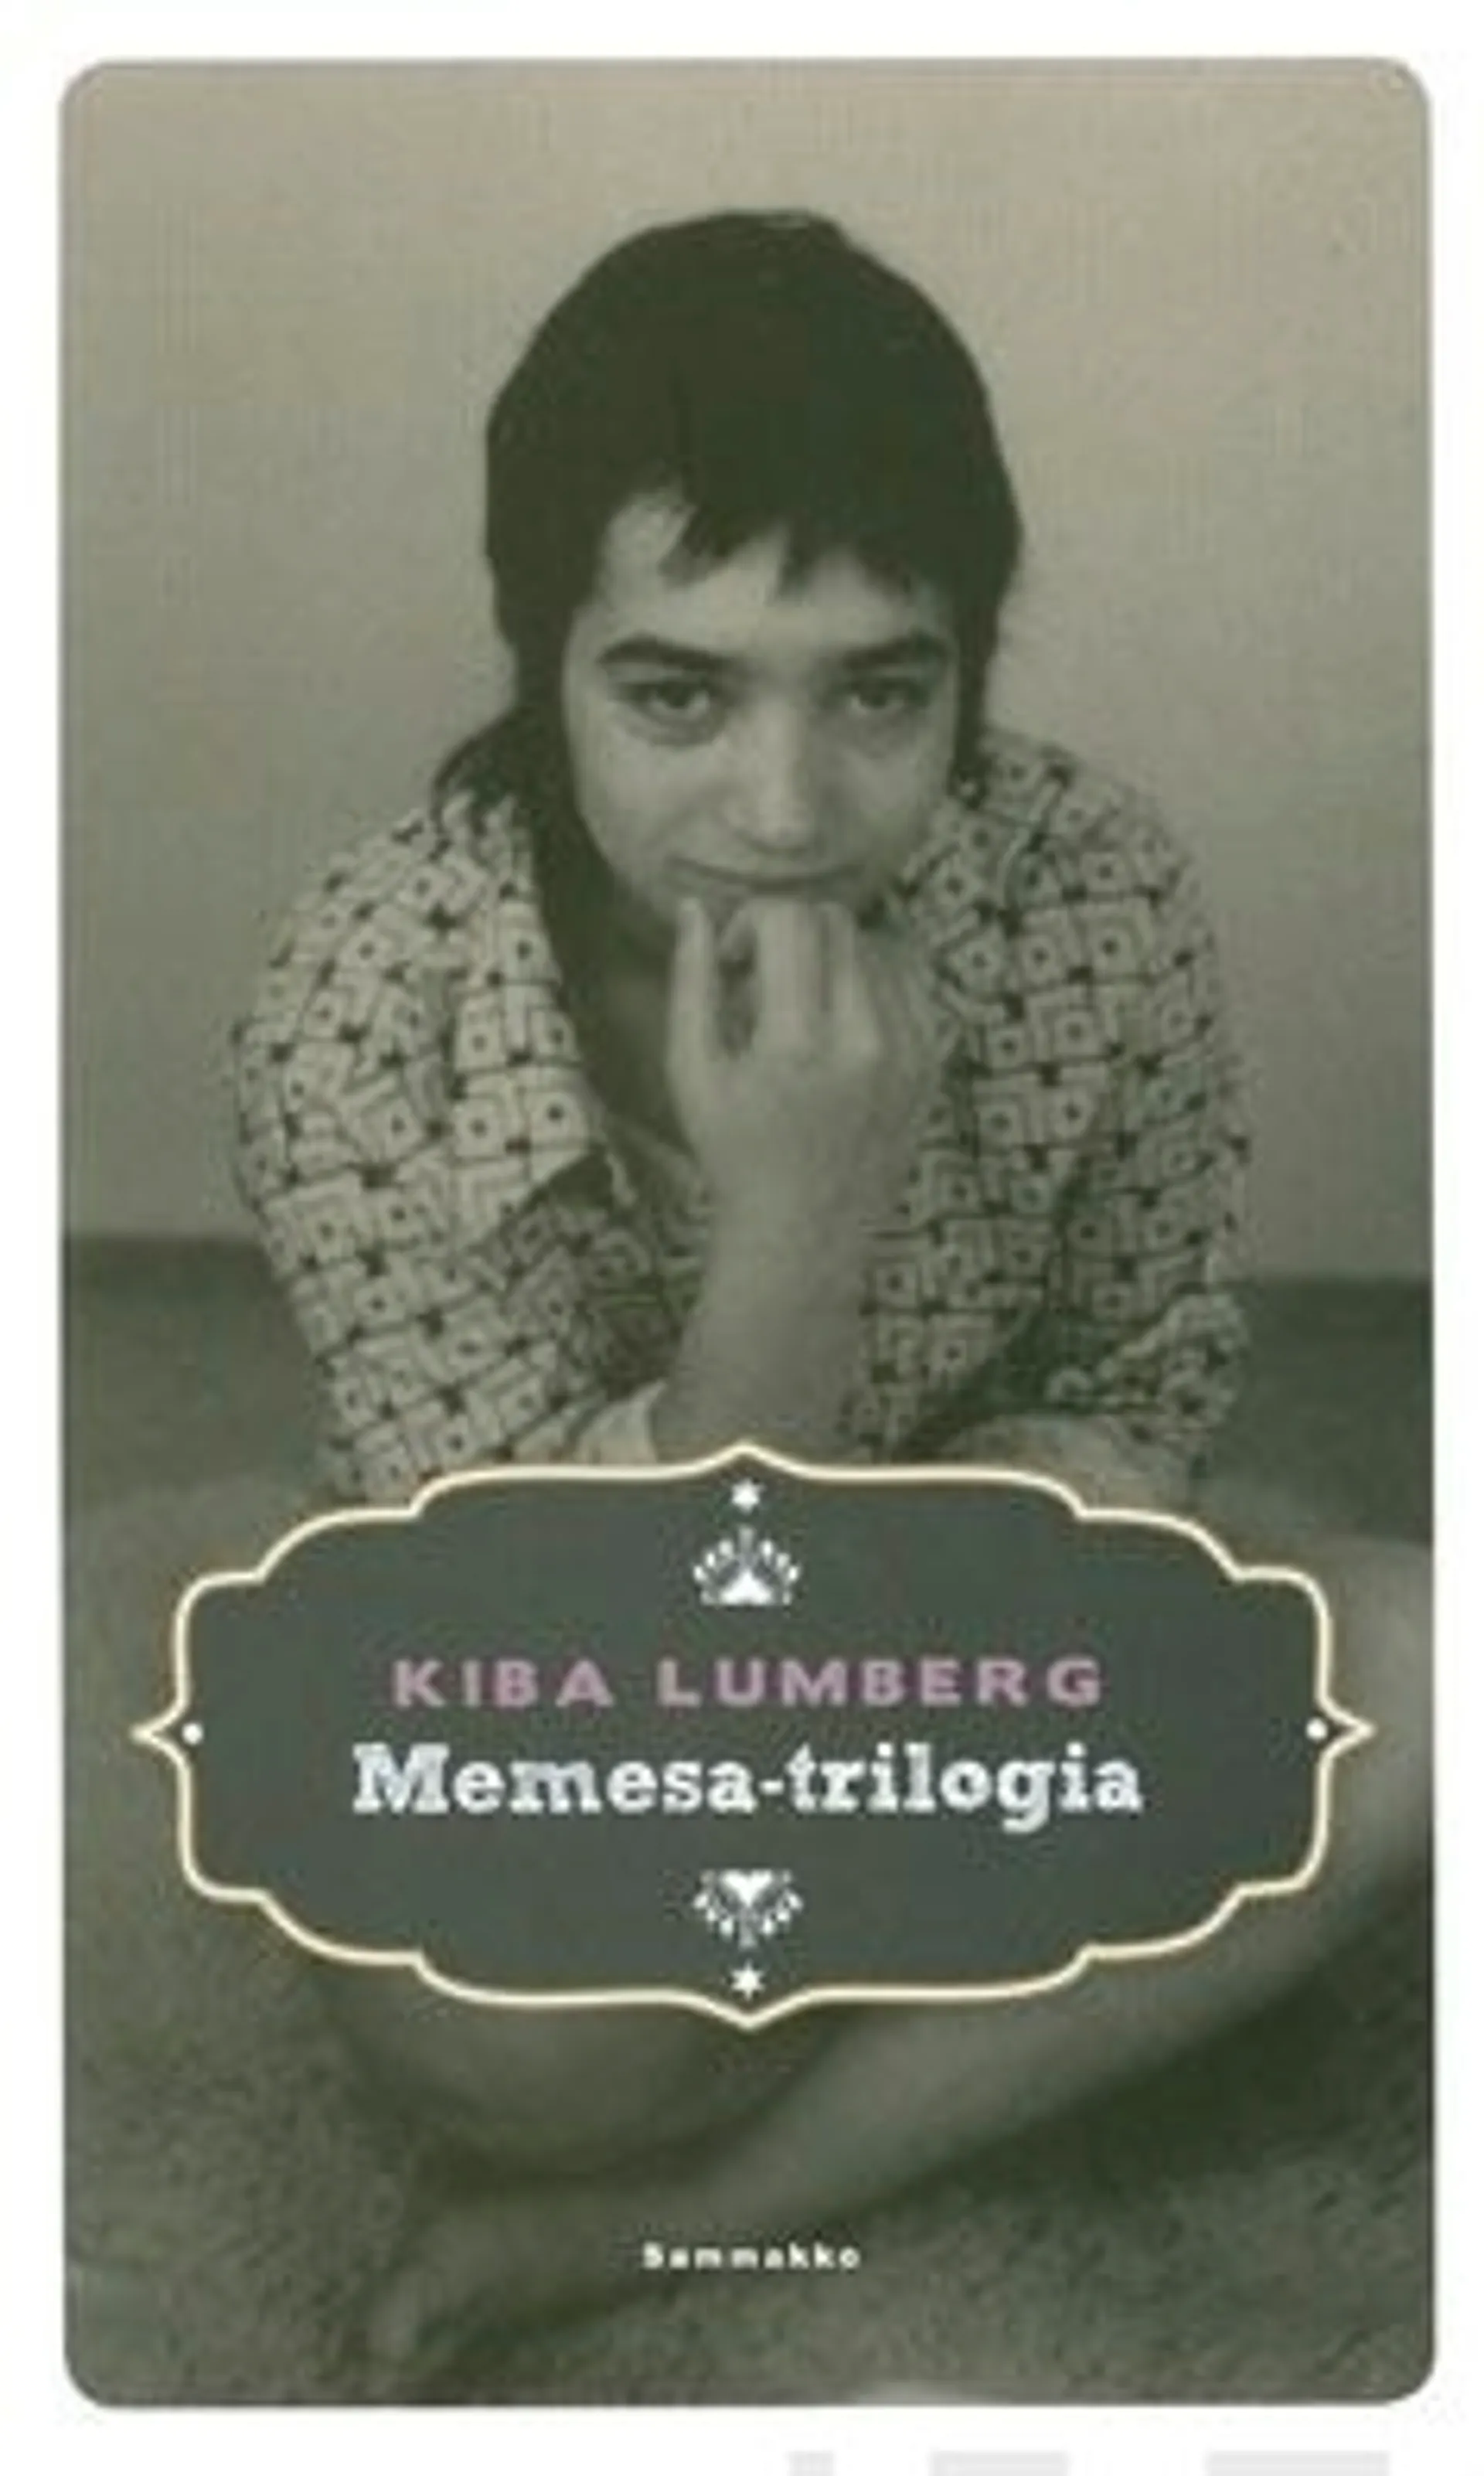 Lumberg, Memesa-trilogia (sis. teokset Musta perhonen, Repaleiset siivet ja Samettiyö)